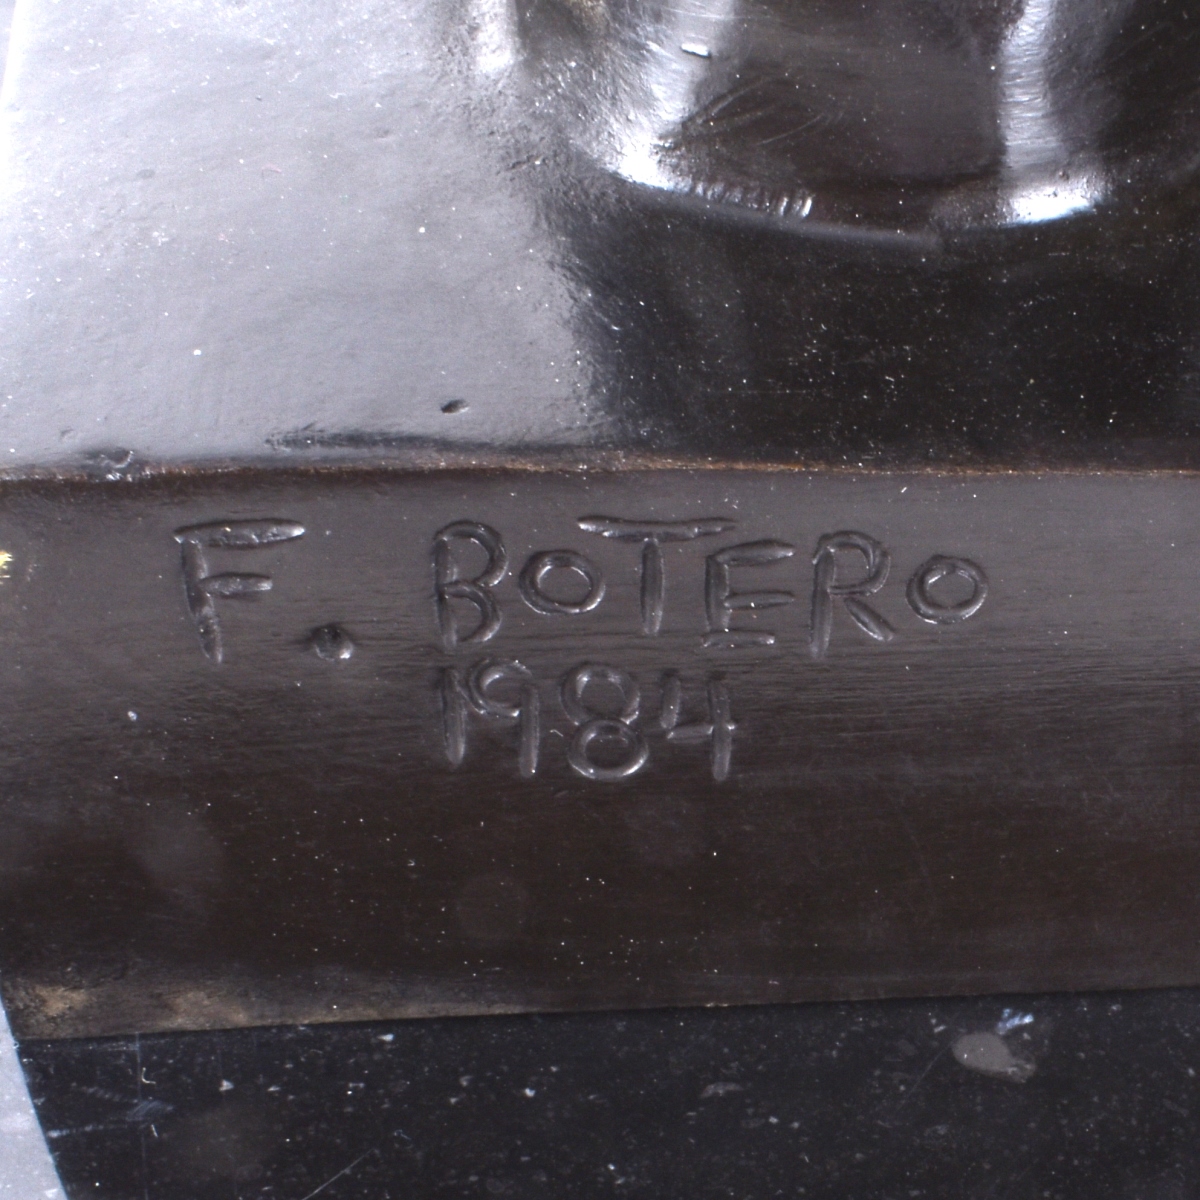 After: Fernando Botero